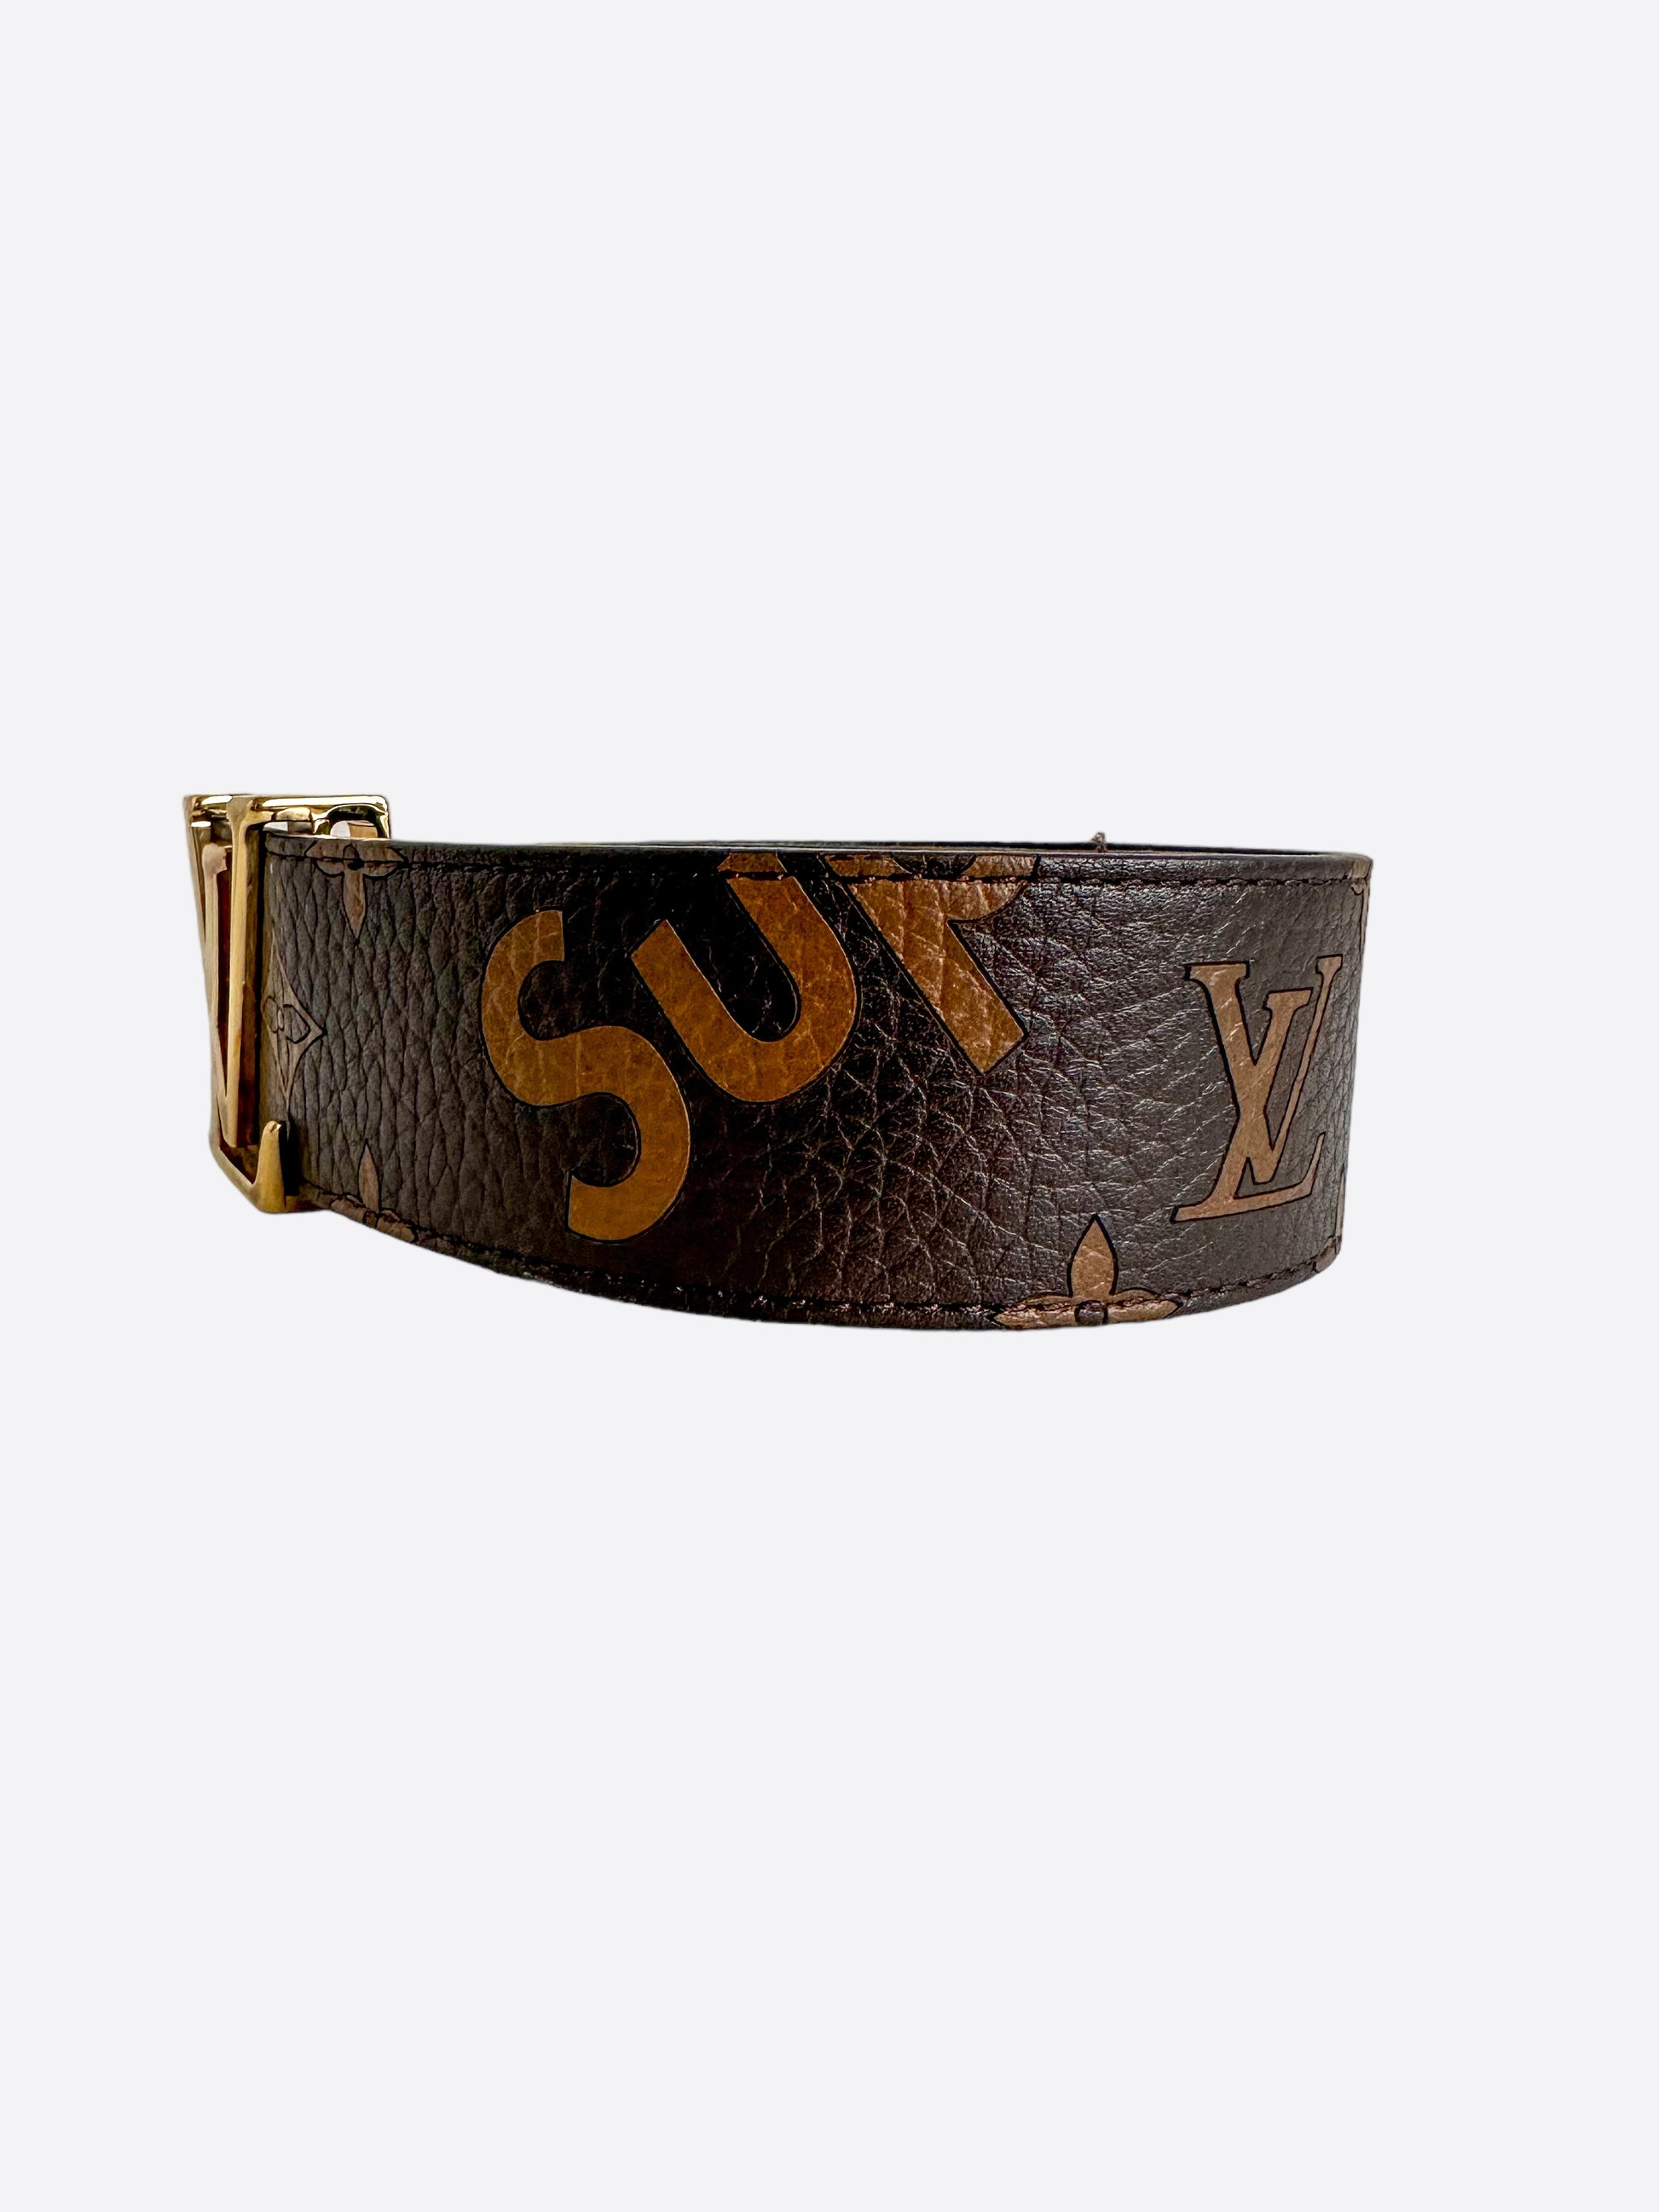 Louis Vuitton x supreme collab belt  Louis vuitton belt, Louis vuitton  accessories, Louis vuitton